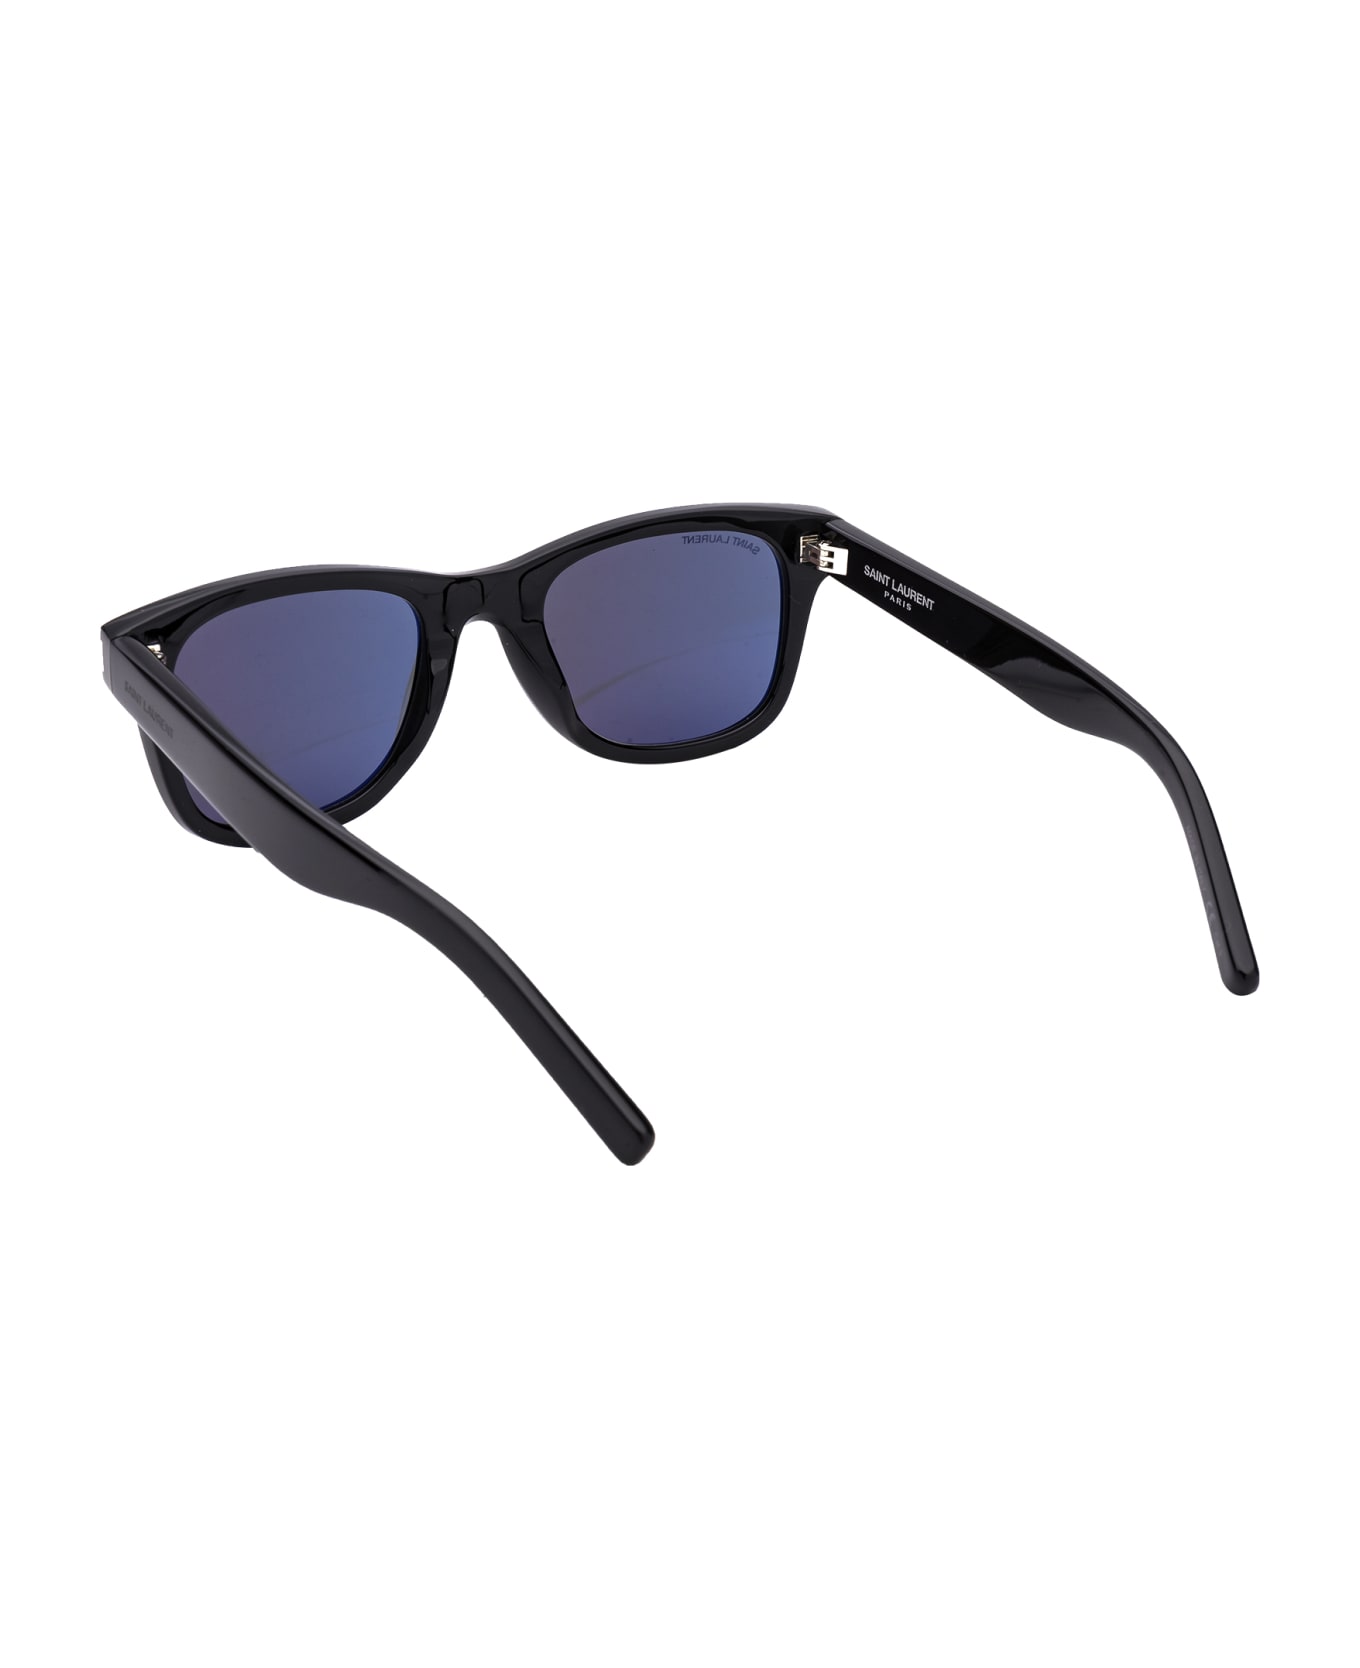 Saint Laurent Eyewear Sl 51 Sunglasses - 002 BLACK BLACK GREY